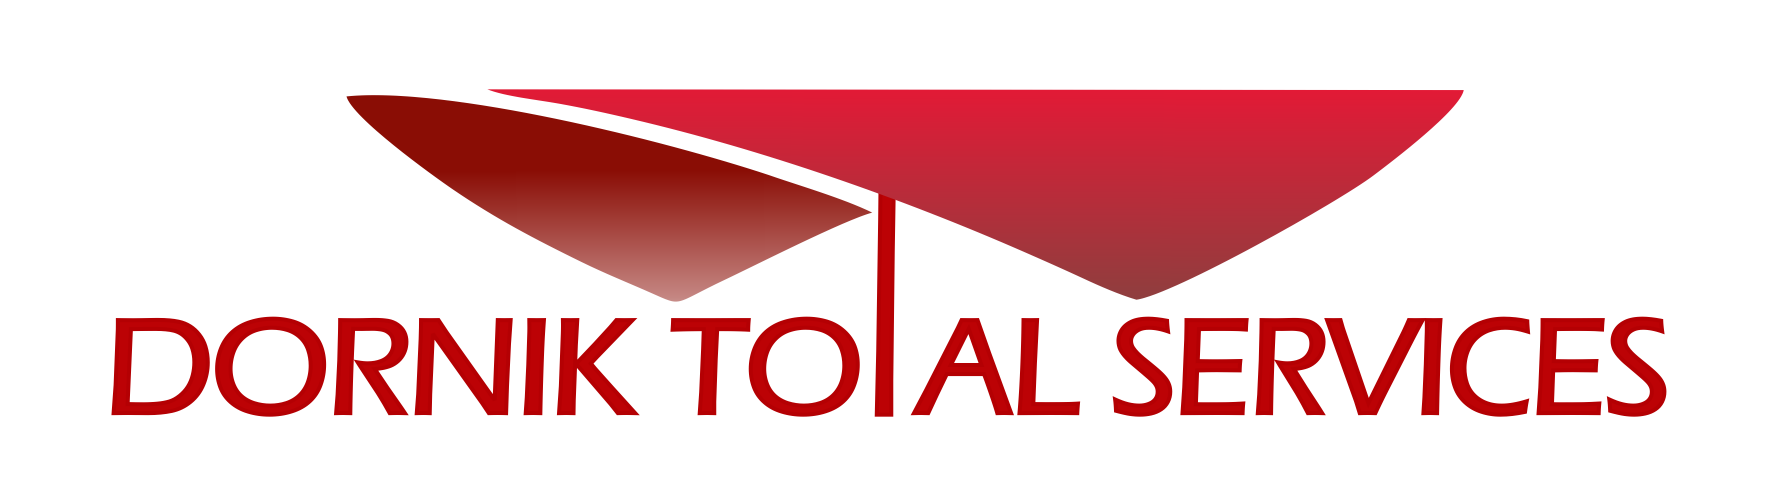 Dornik Total Services